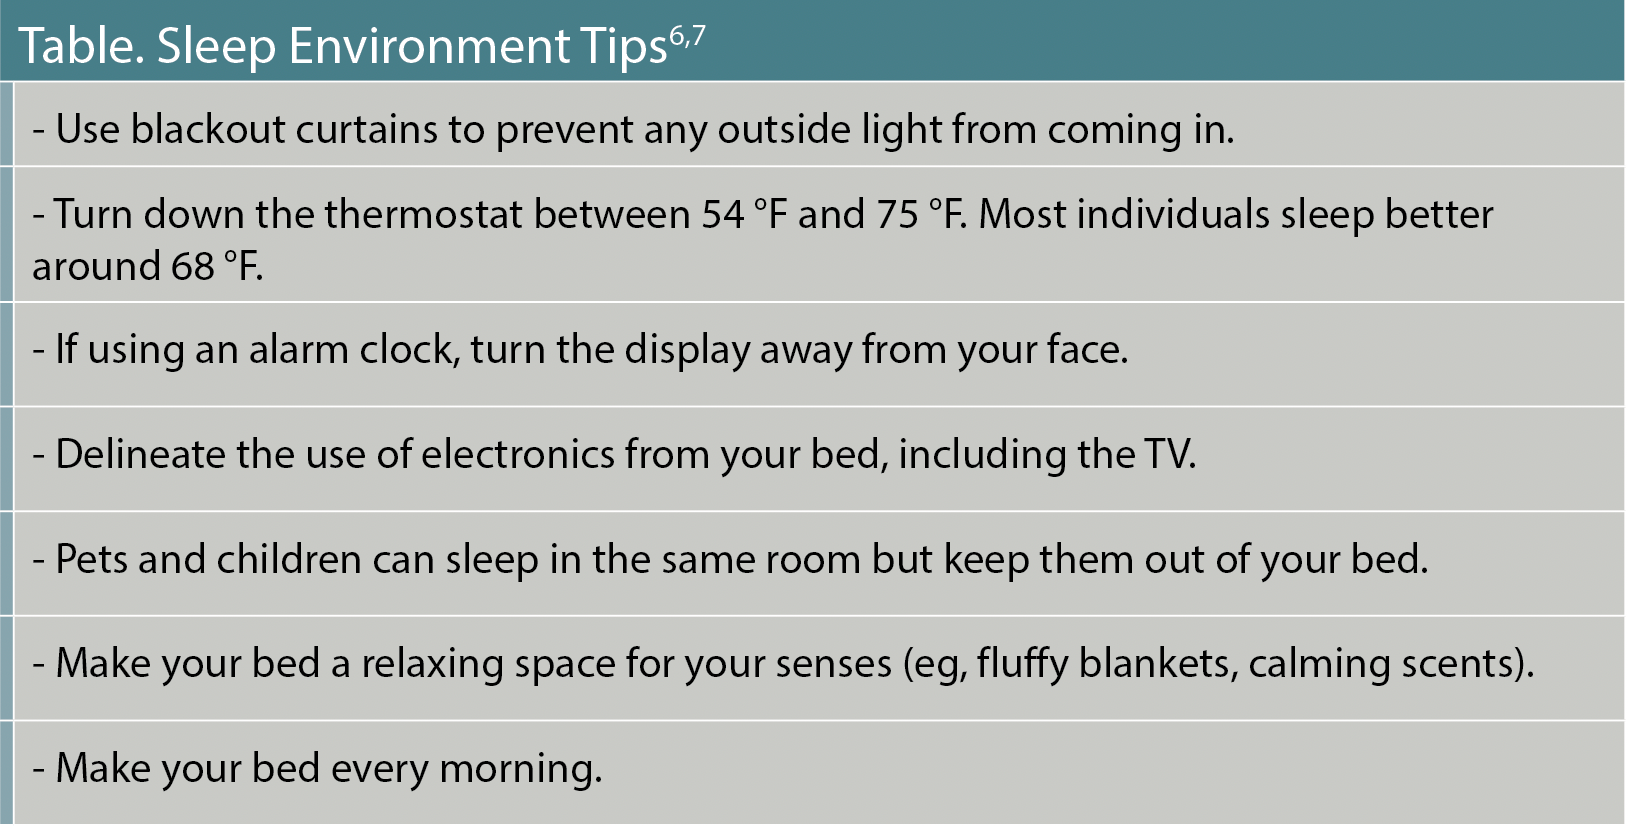 Table. Sleep Environment Tips